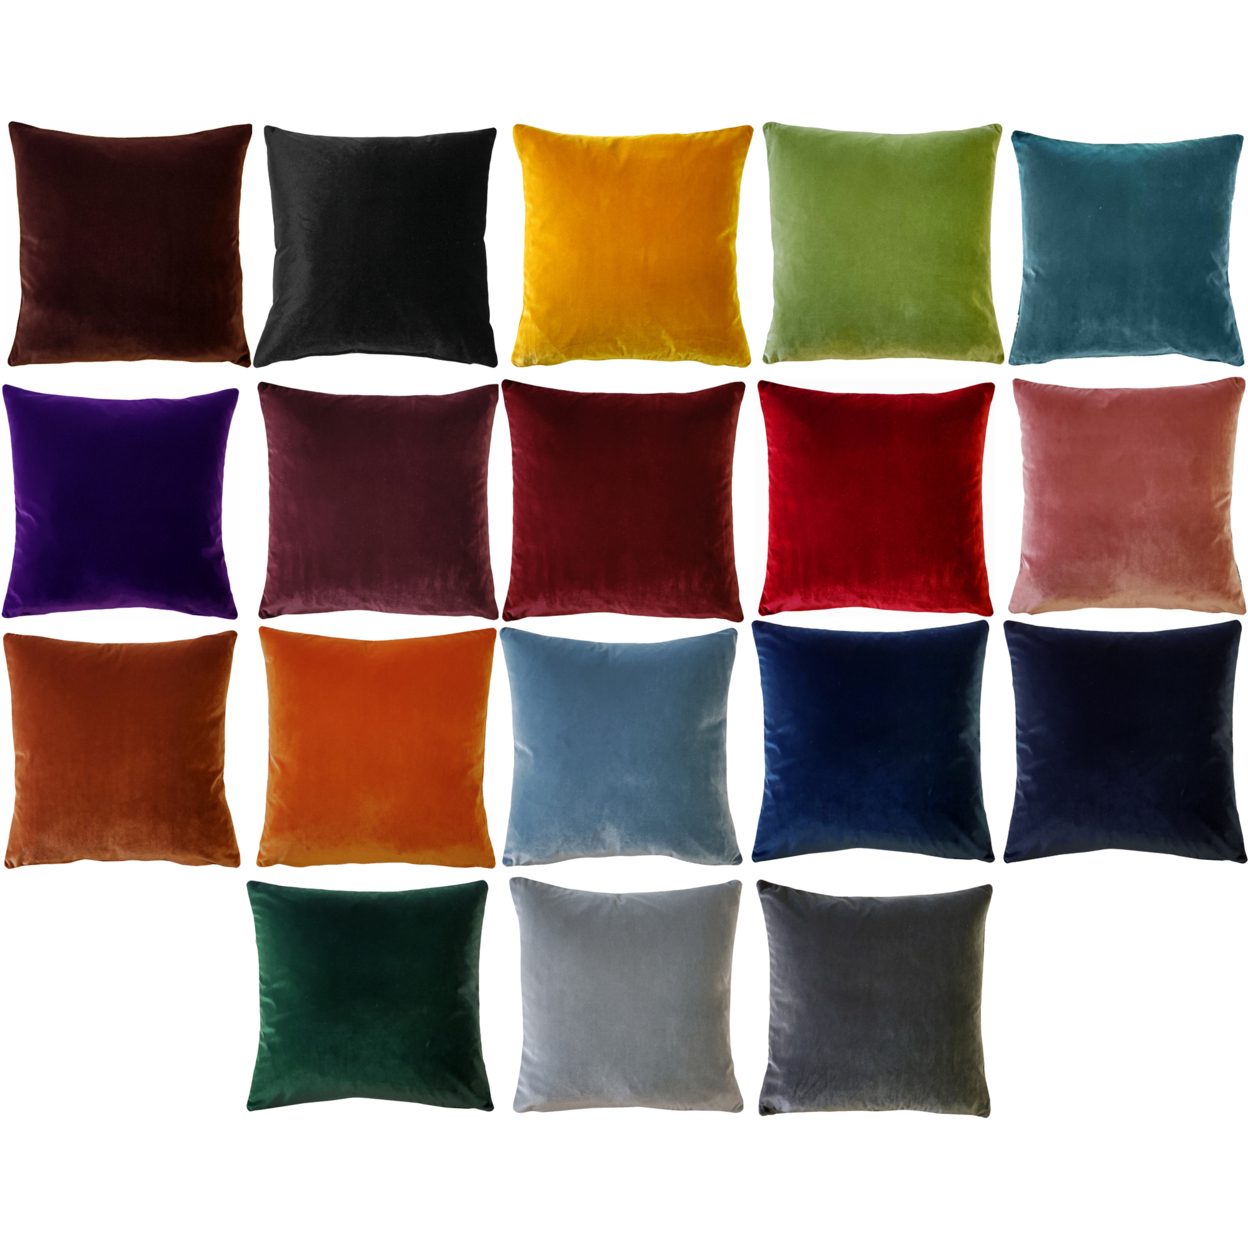 Castello Velvet Throw Pillows, Complete Pillow With Polyfill Pillow Insert (18 Colors, 3 Sizes) - Burgundy, 12x20